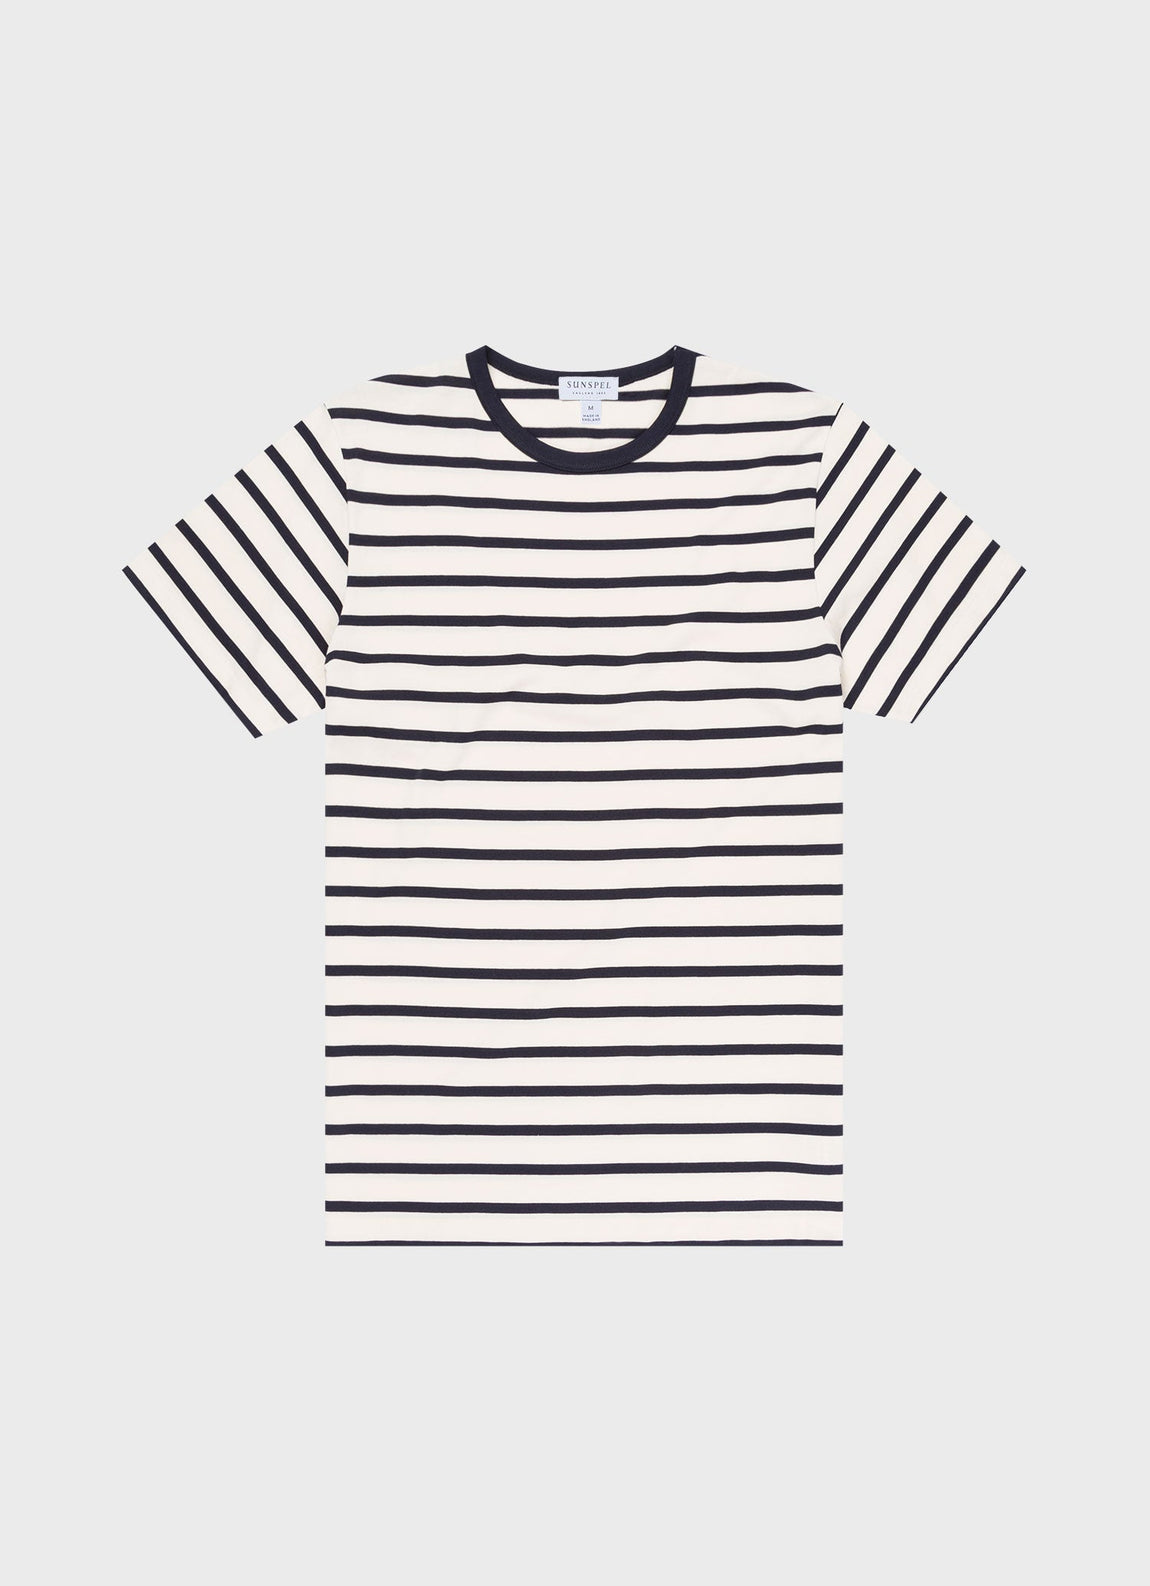 Men's Classic T-shirt in Ecru/Navy Breton Stripe